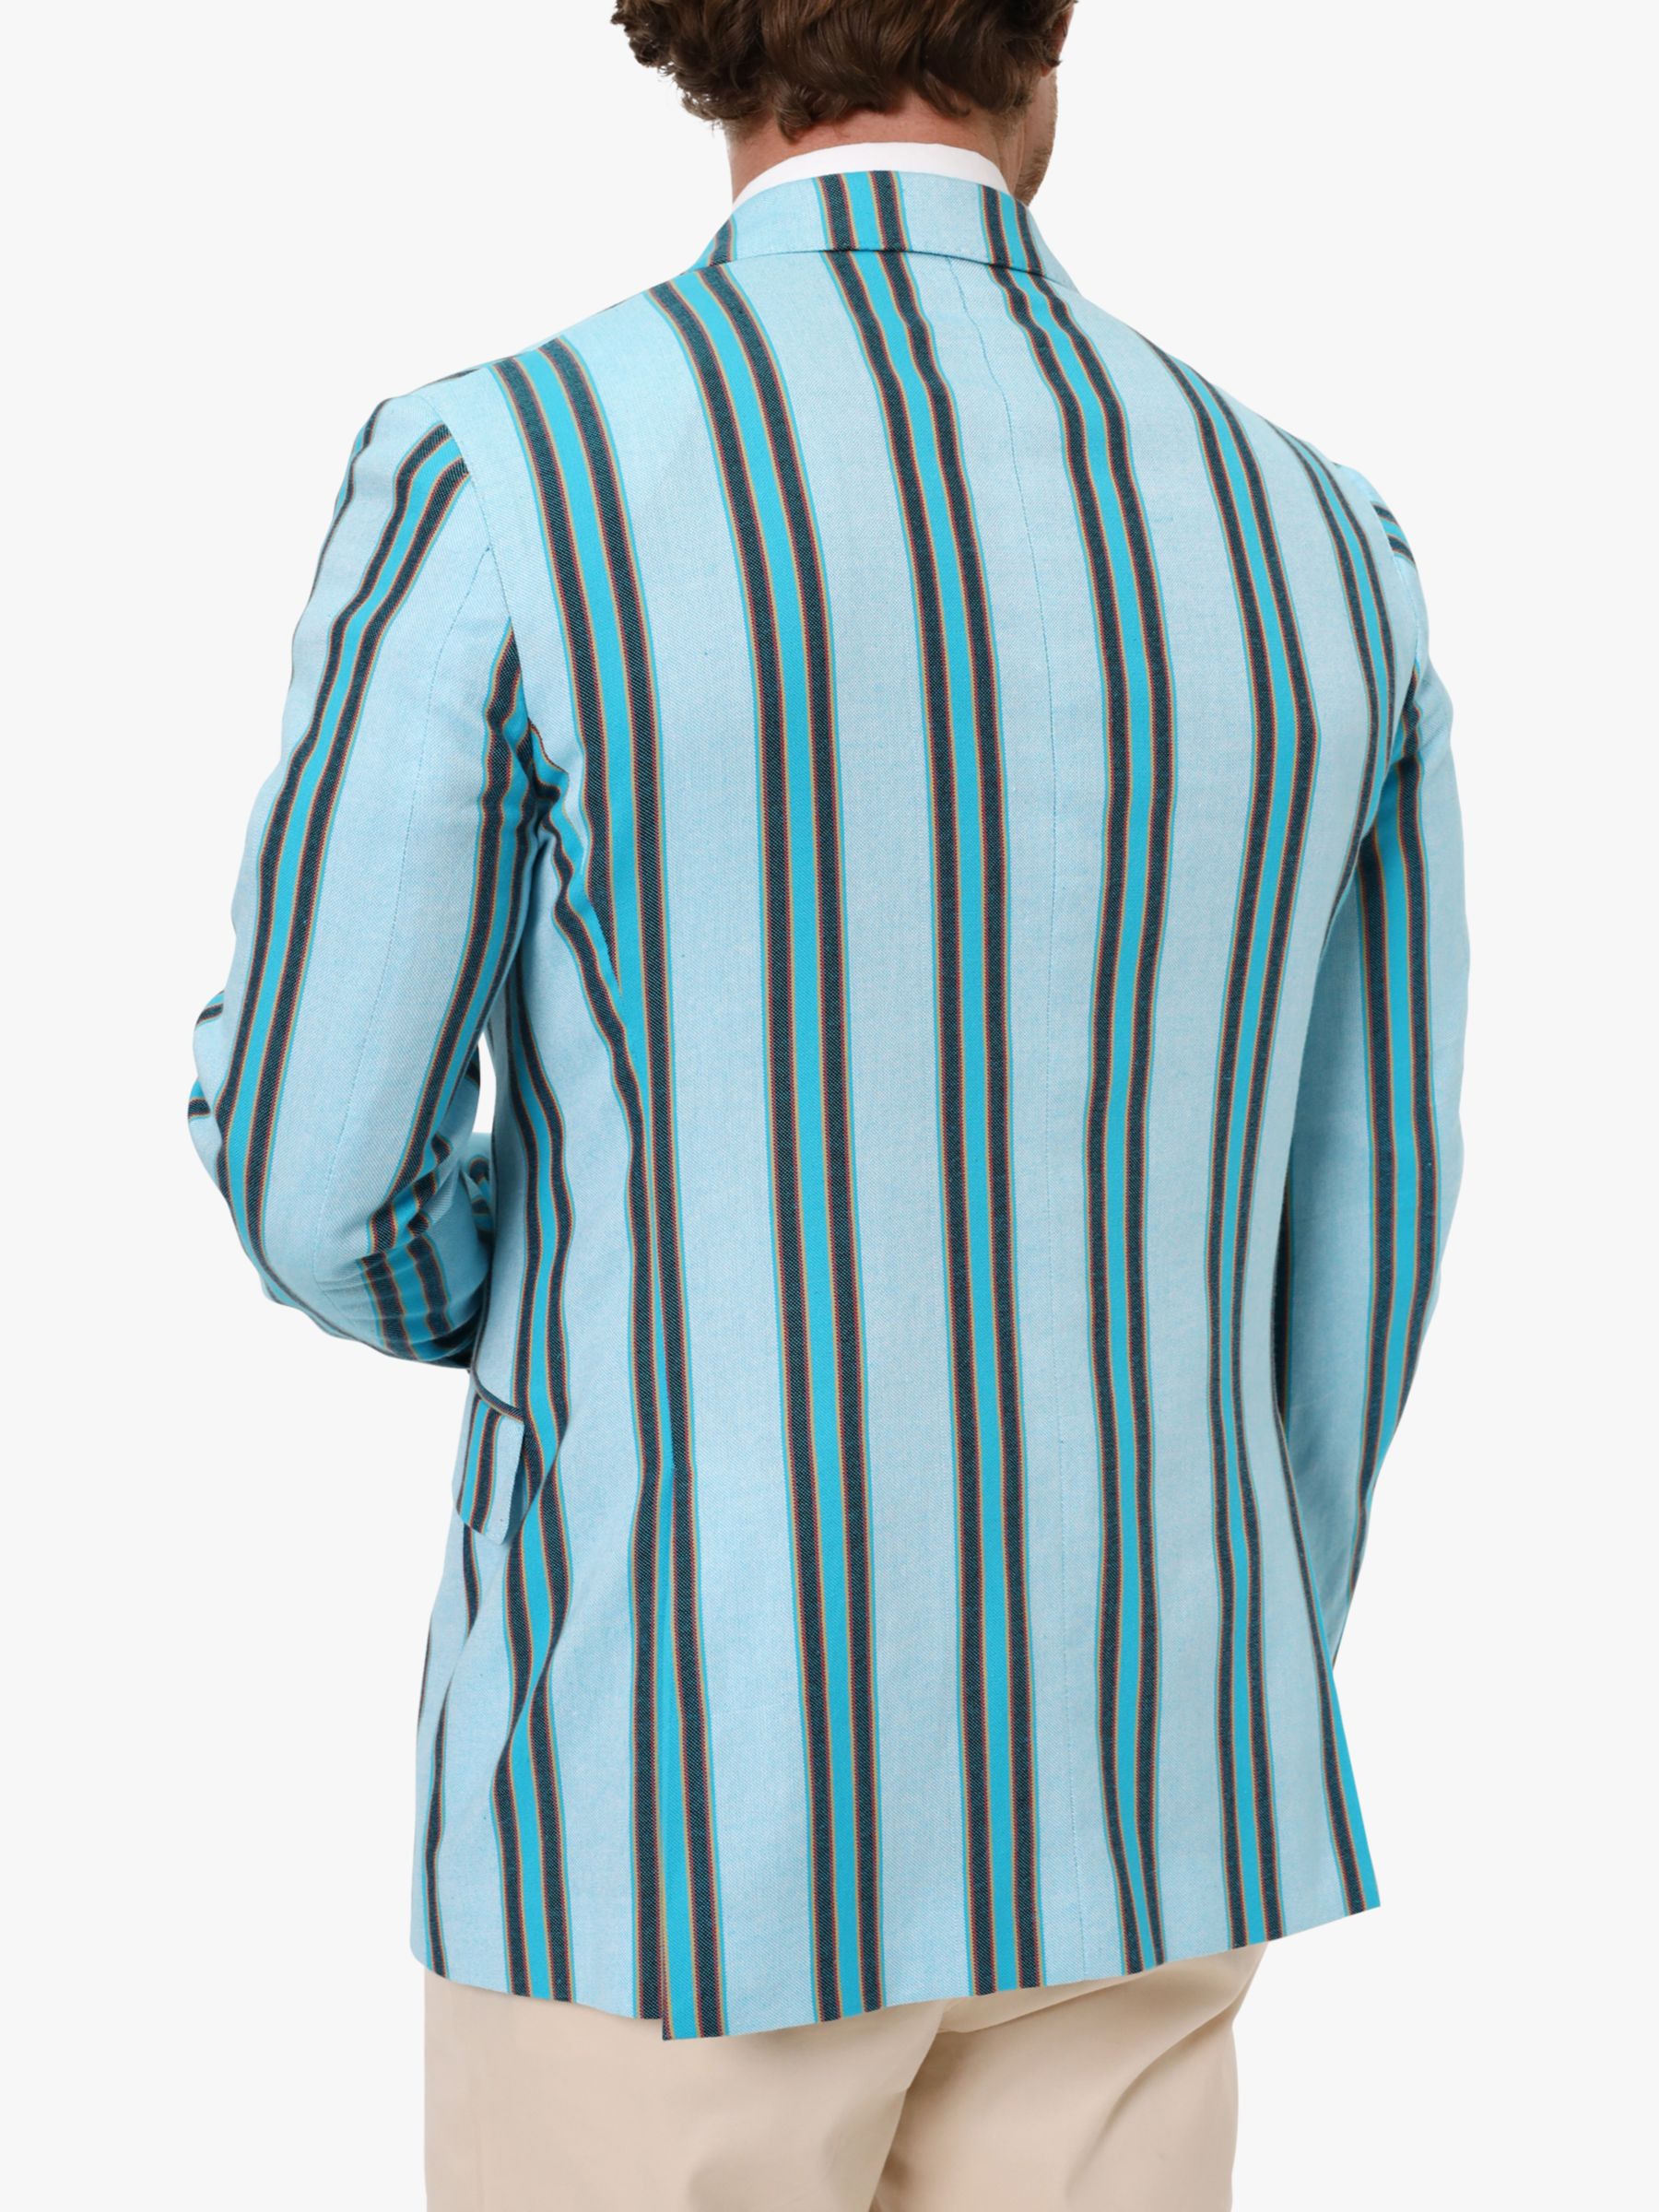 Buy KOY Kikoy Striped Blazer, Turquoise Online at johnlewis.com